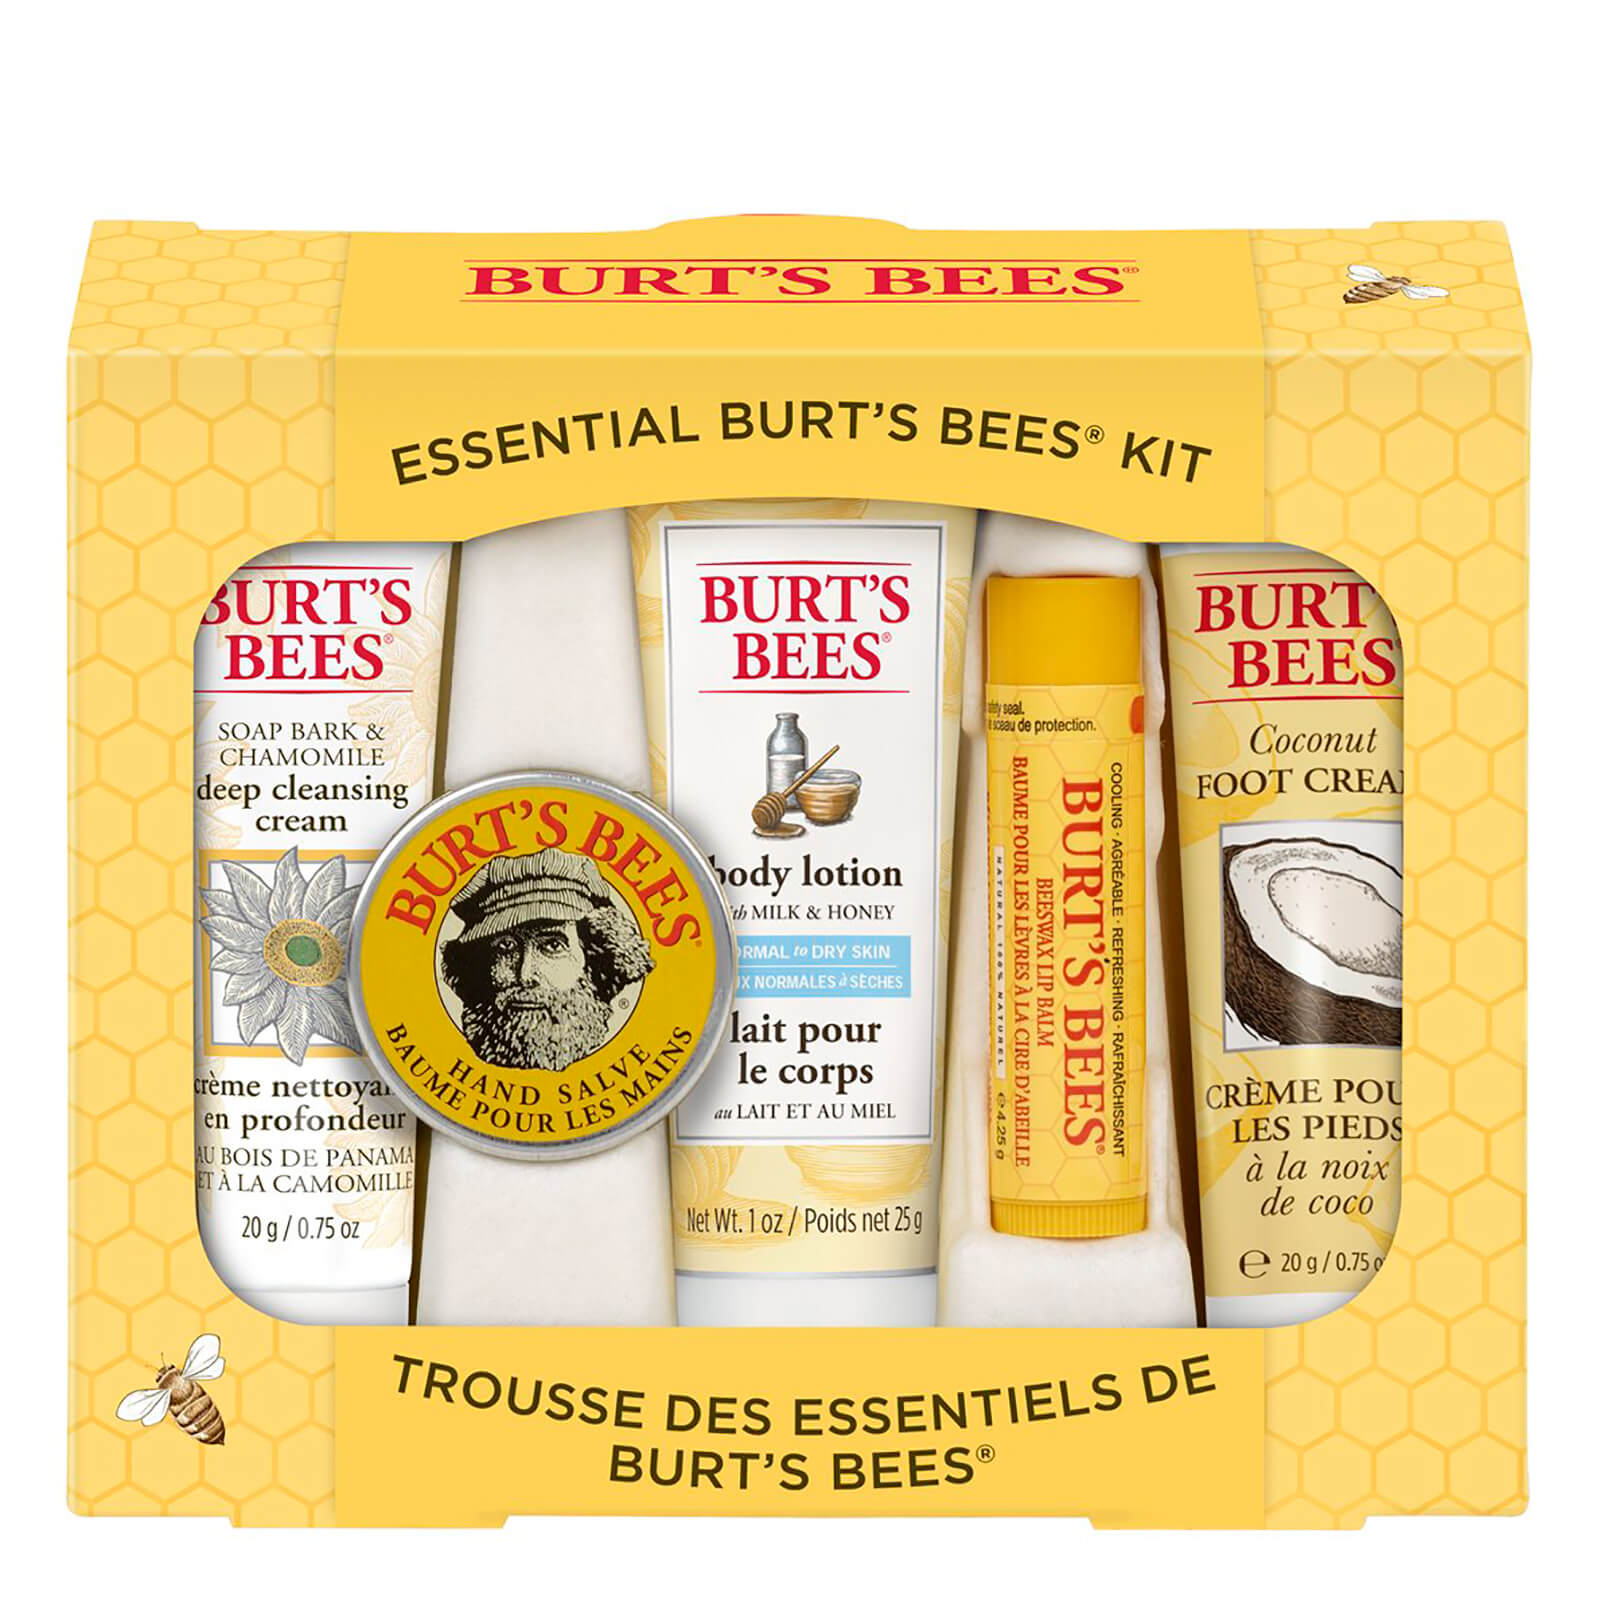 Burt's Bees essentials kit (5 products)